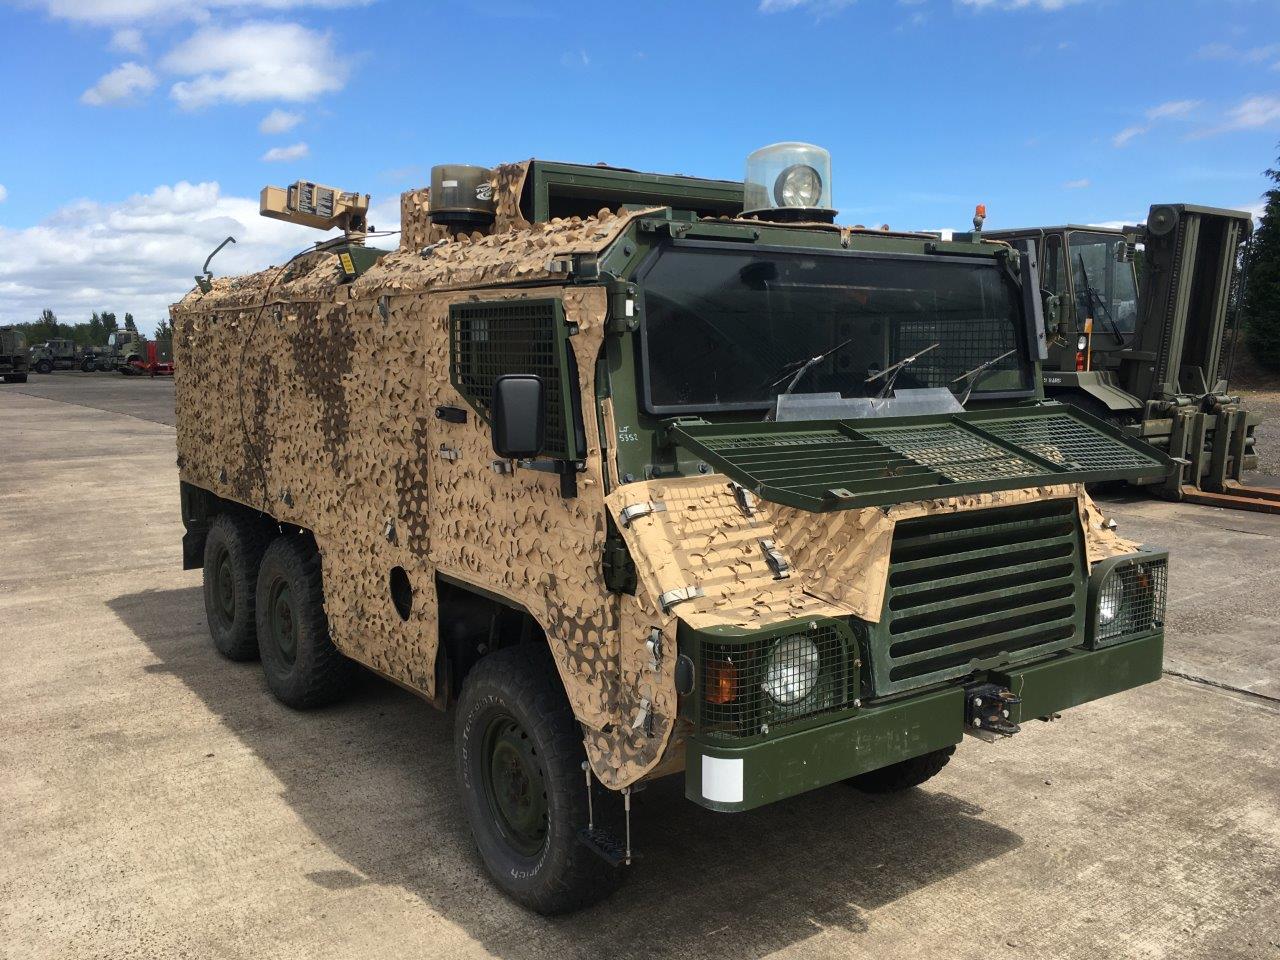 Pinzgauer Vector 718 6×6 Armoured Patrol Vehicles - ex military vehicles for sale, mod surplus